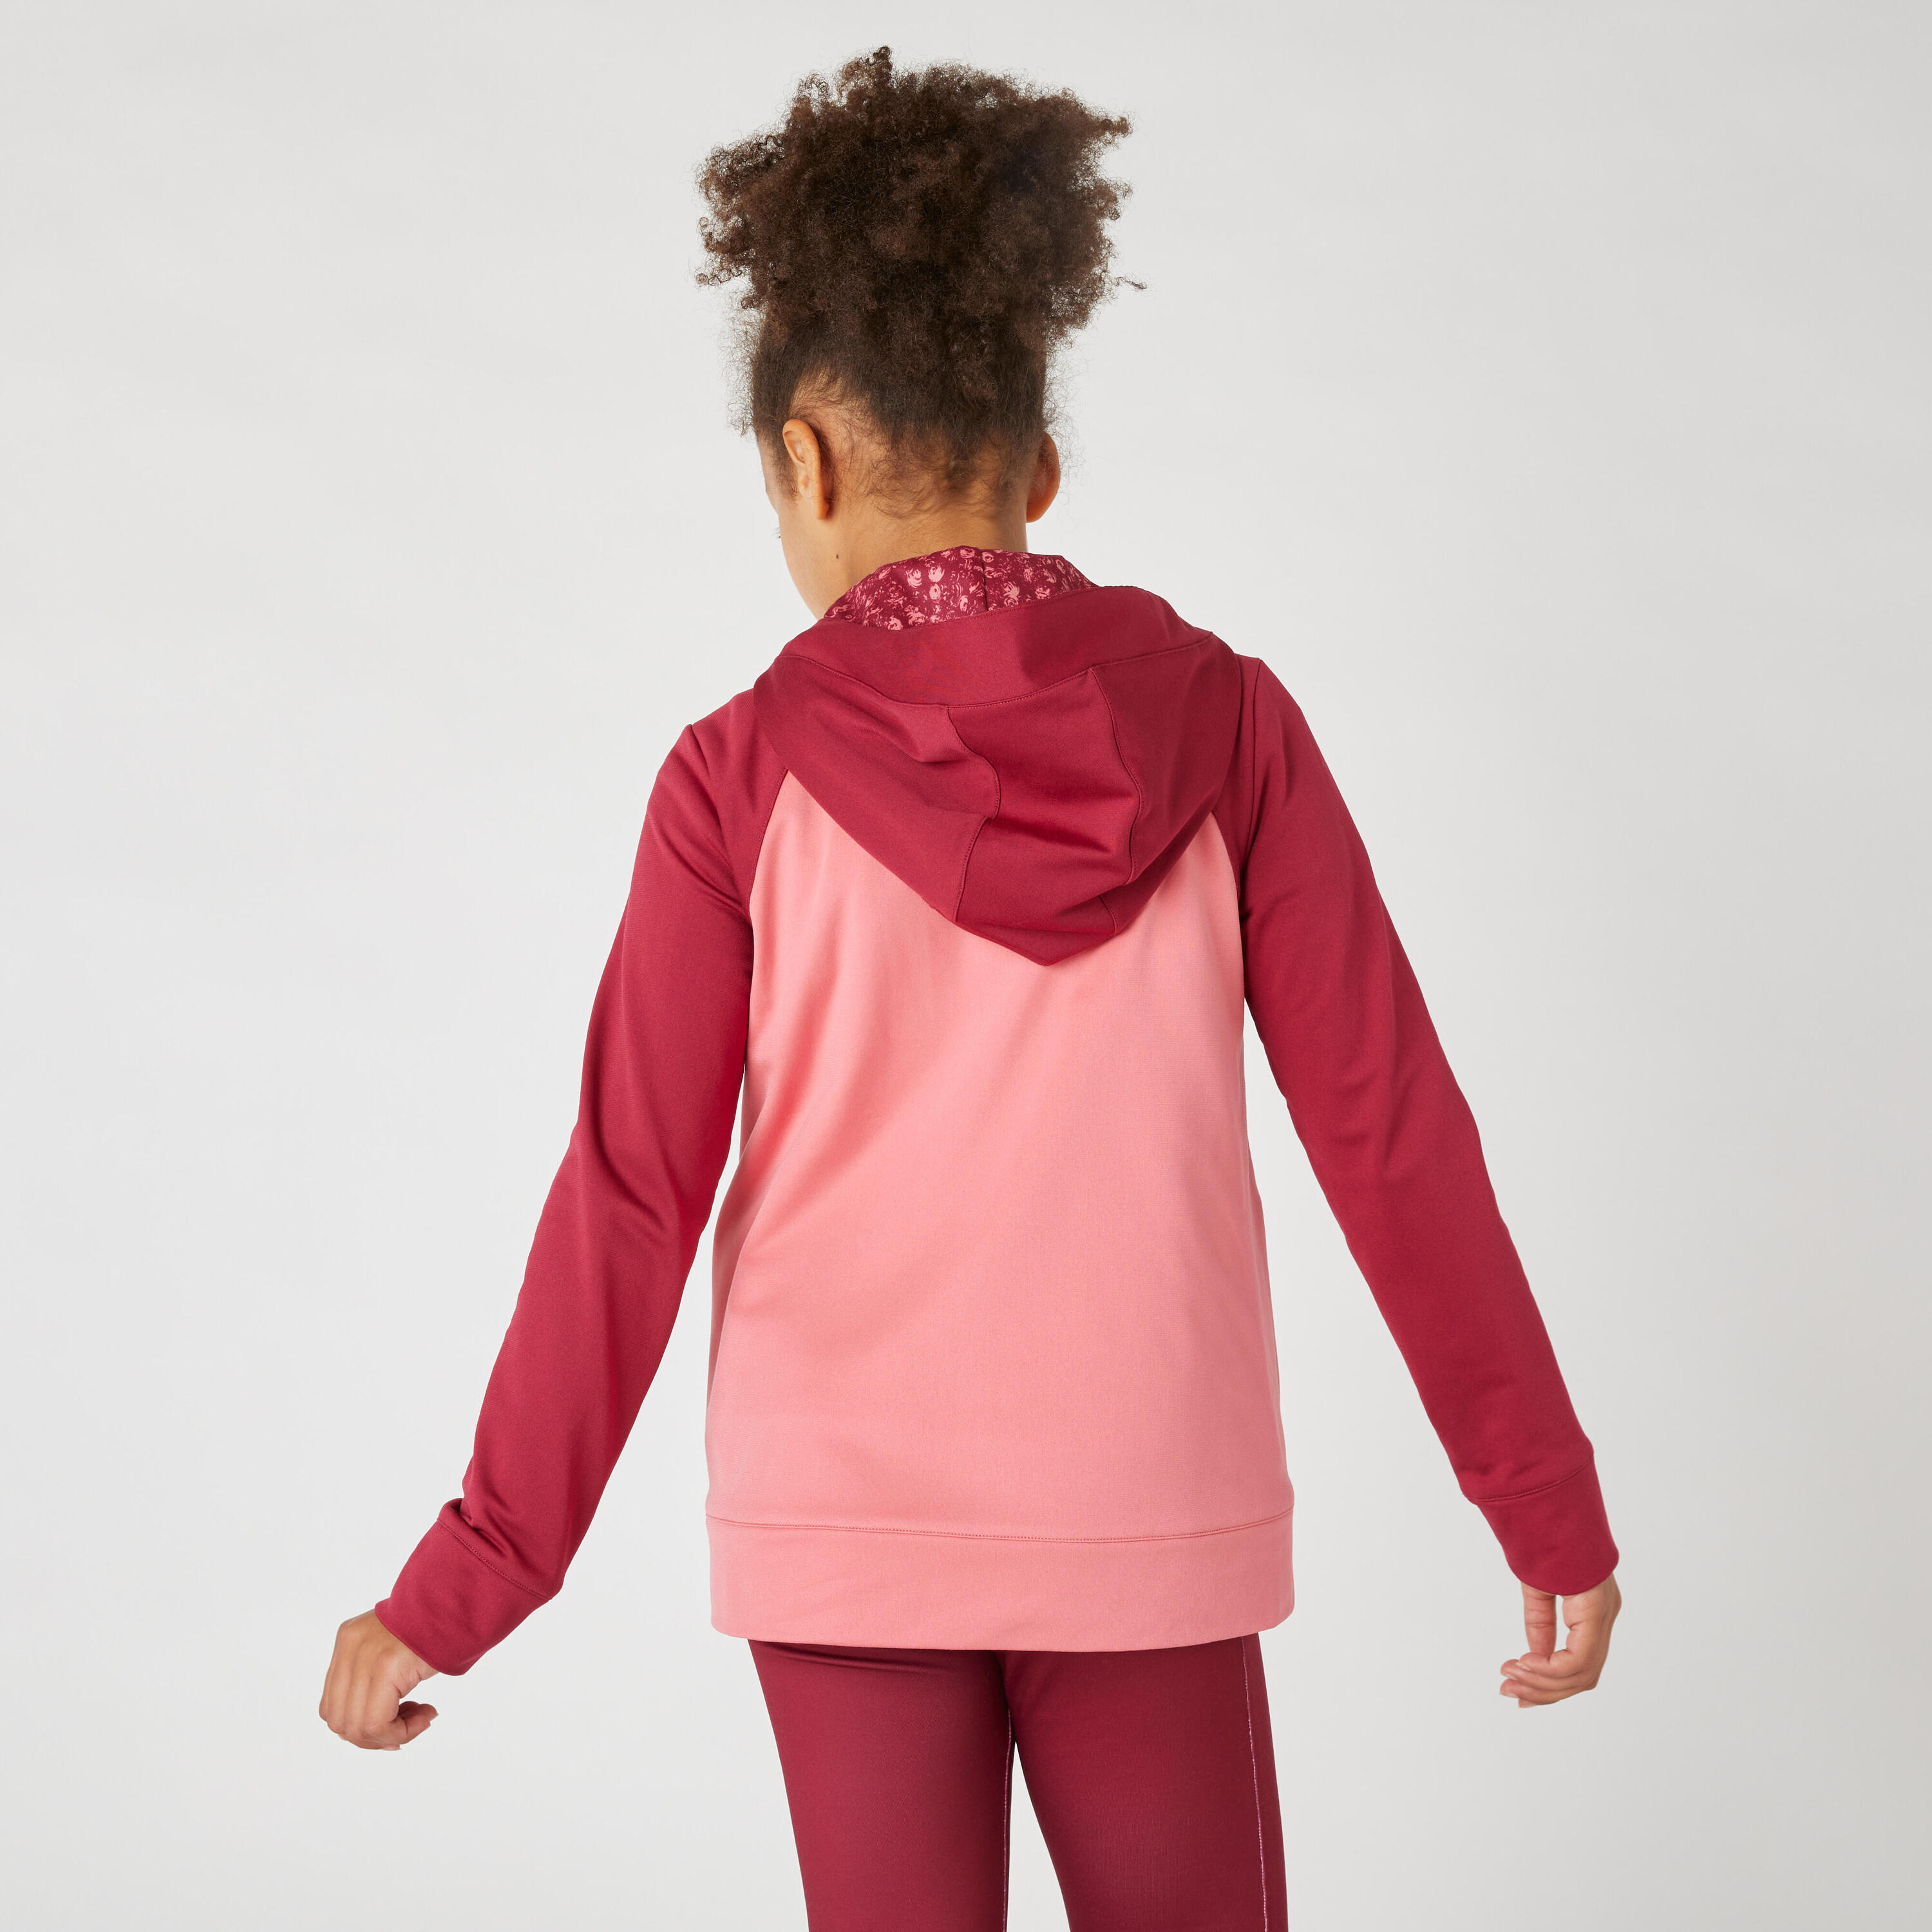 Girls' Warm Breathable Gym Jacket S500 - Pink/Burgundy 2/6